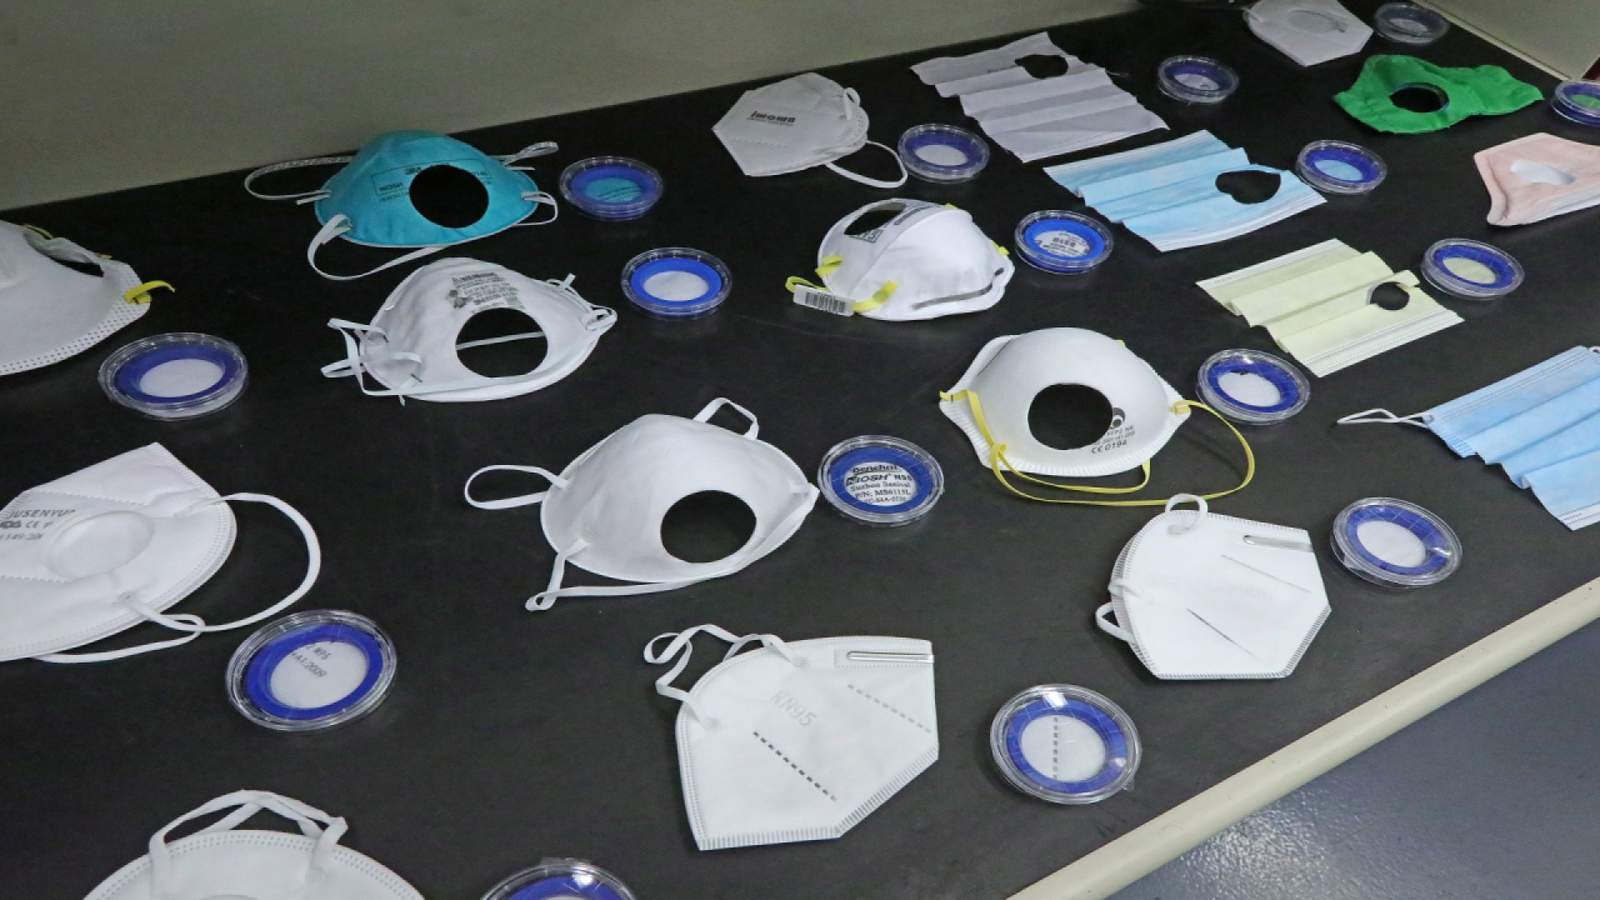 SwRI: Testing reveals ‘counterfeit’ KN95 masks